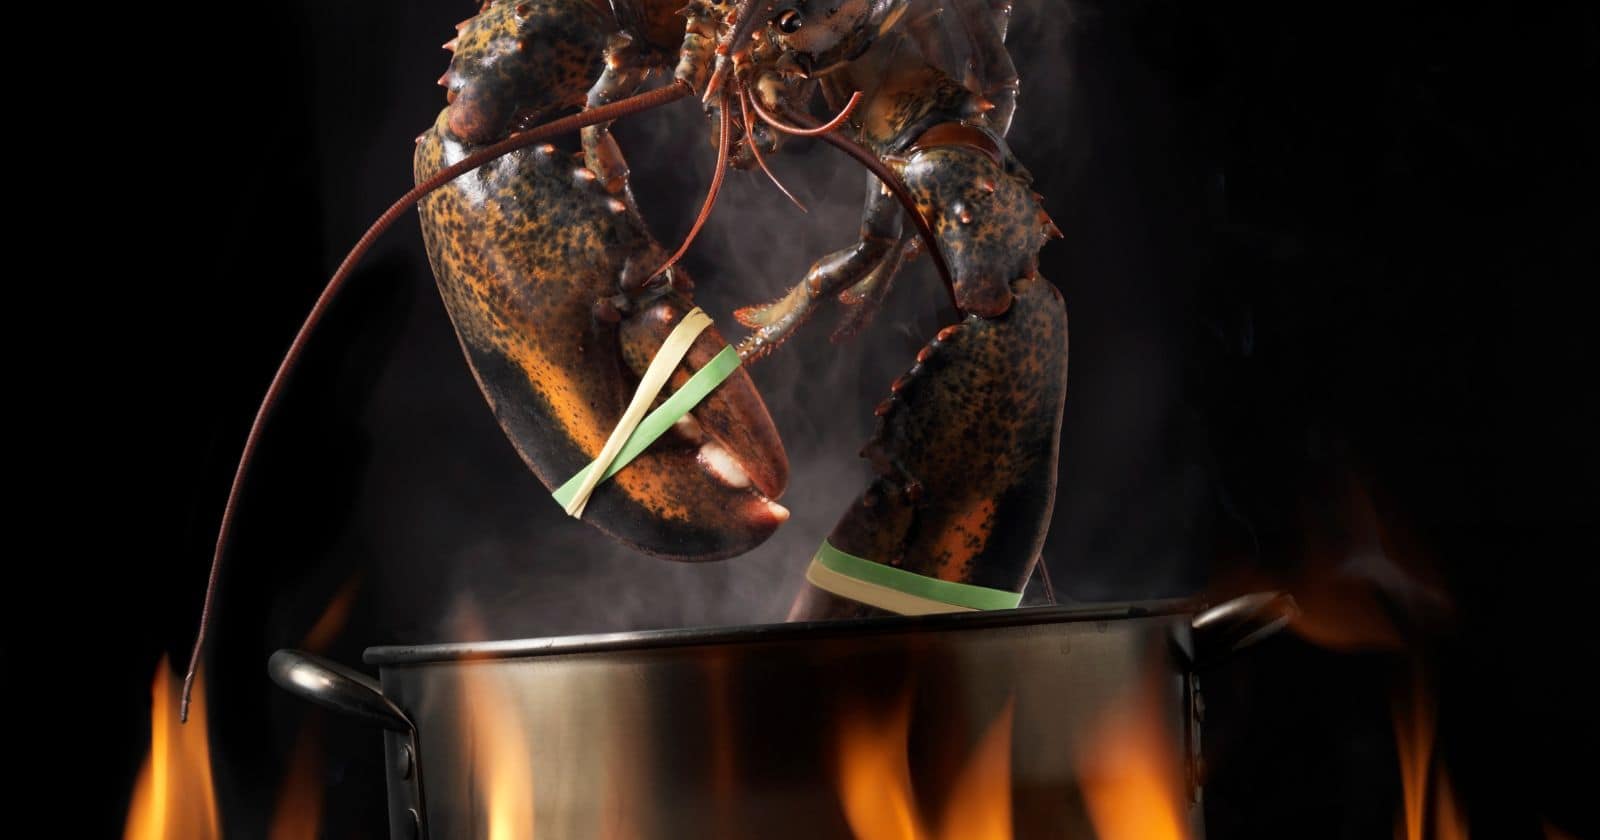 Lobster Boil Time Per Pound